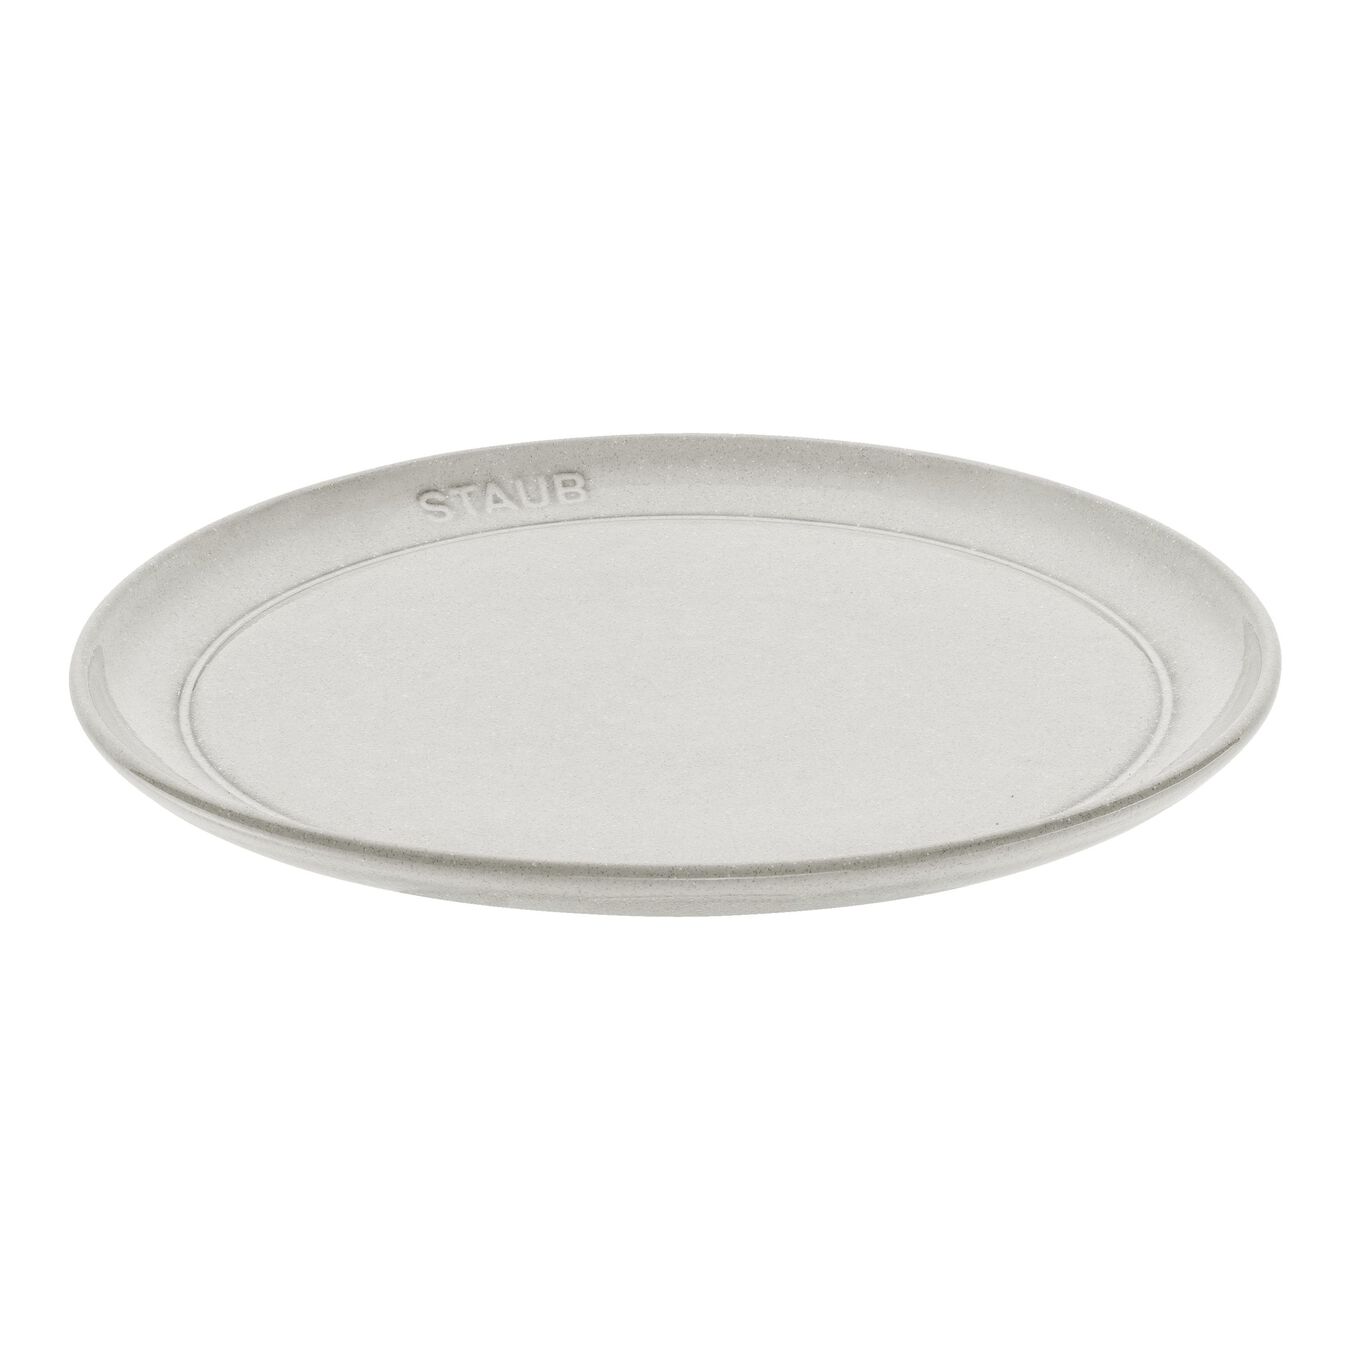 22 cm Ceramic Plate flat white truffle,,large 1